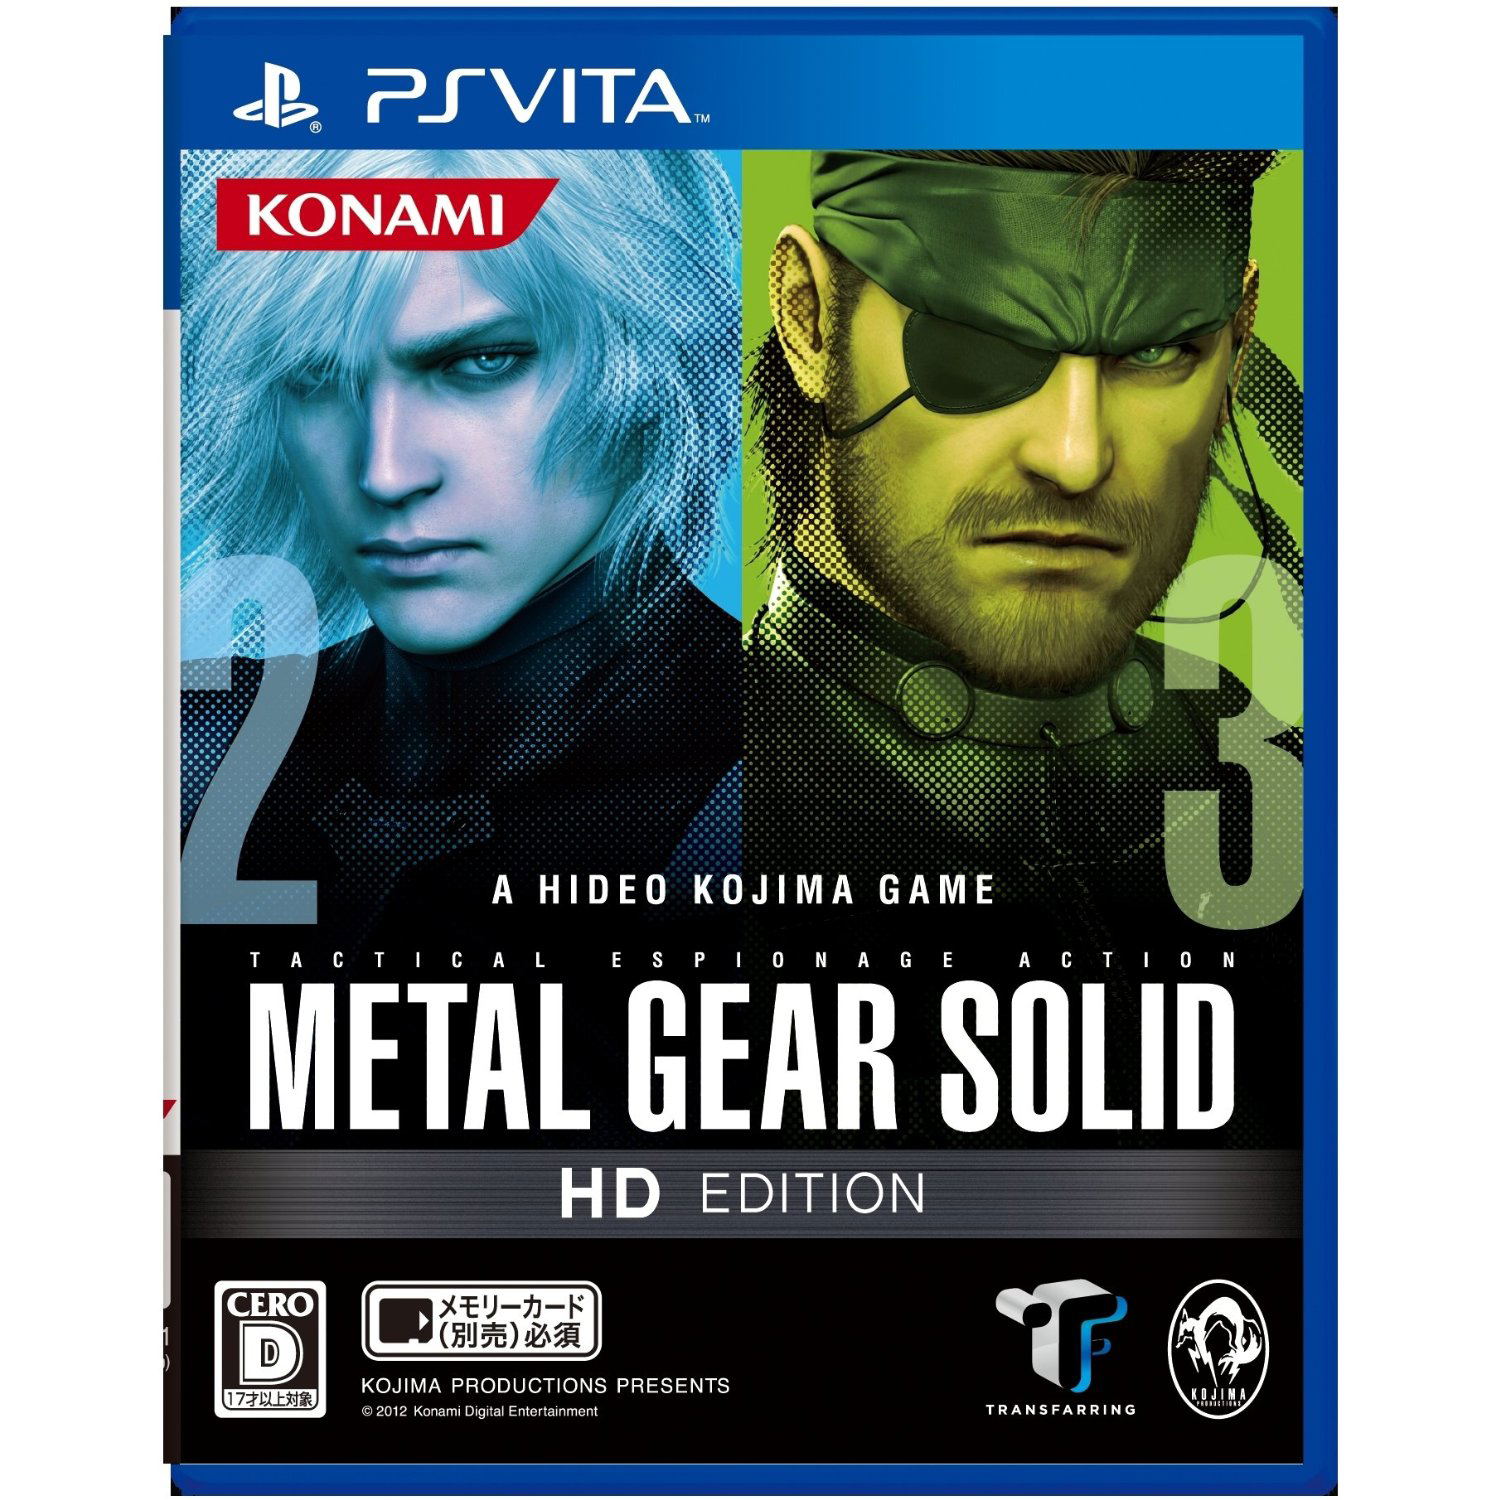 Metal Gear Solid HD Edition for PlayStation Vita